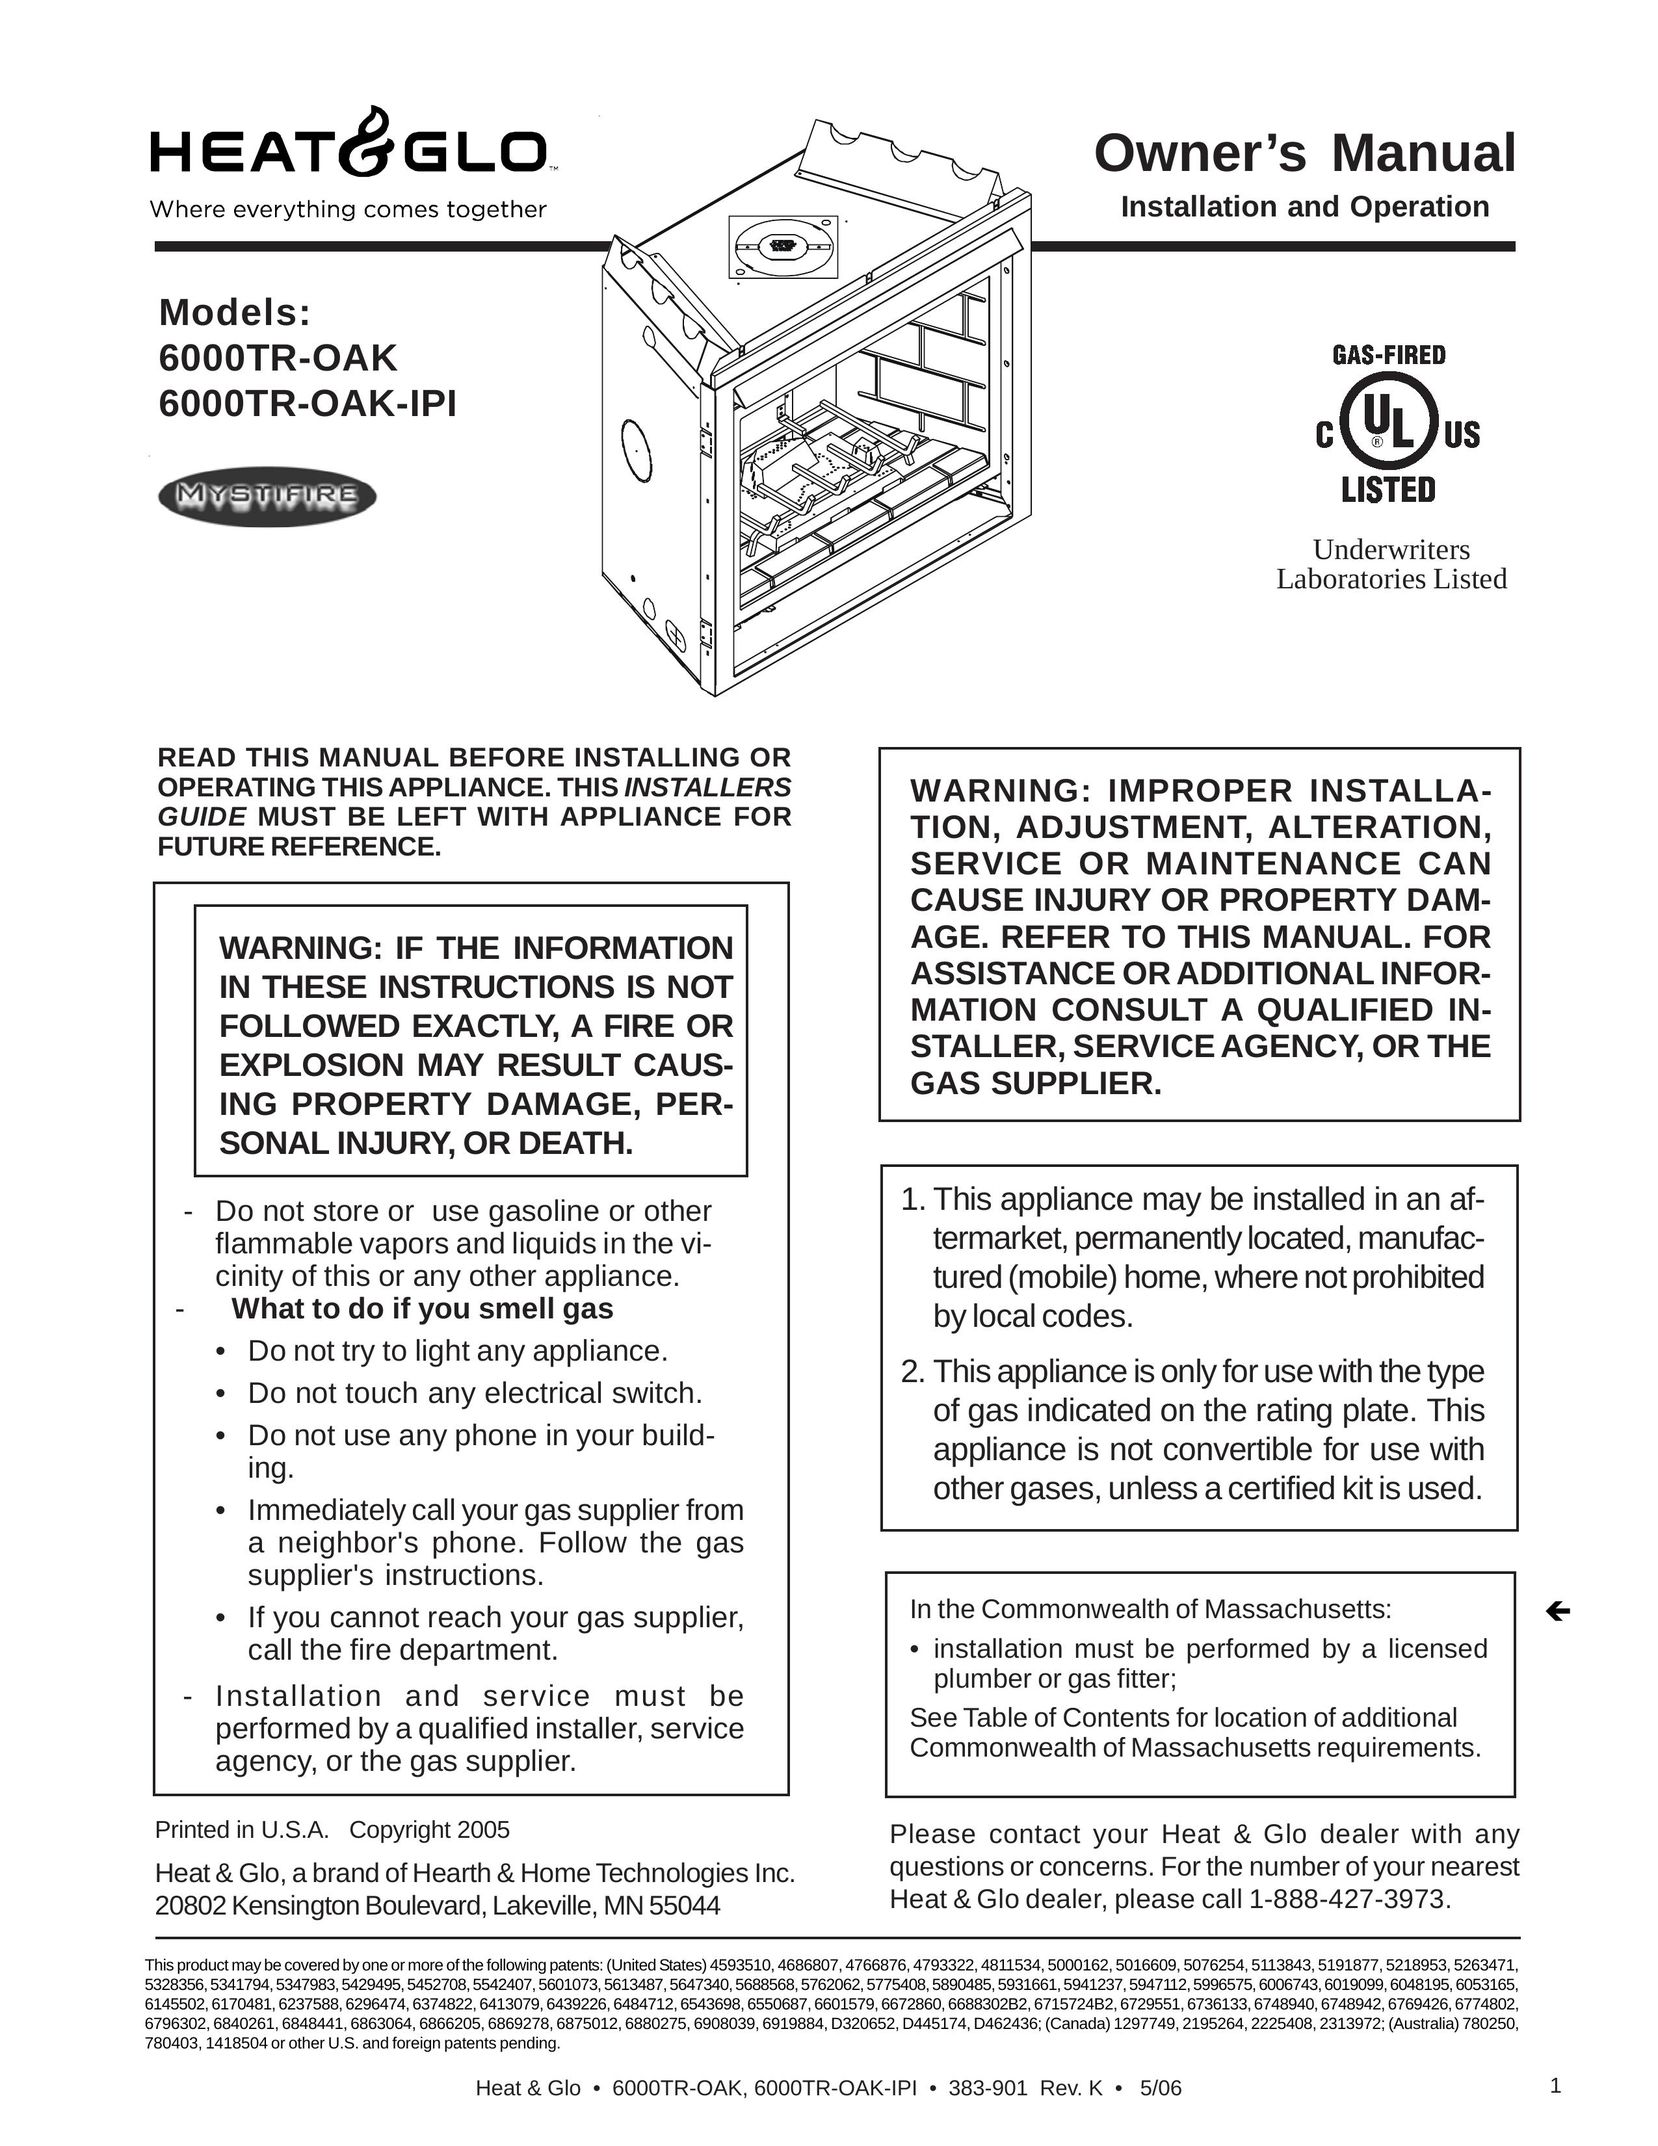 Heat & Glo LifeStyle 6000TR-OAK-IPI Indoor Fireplace User Manual